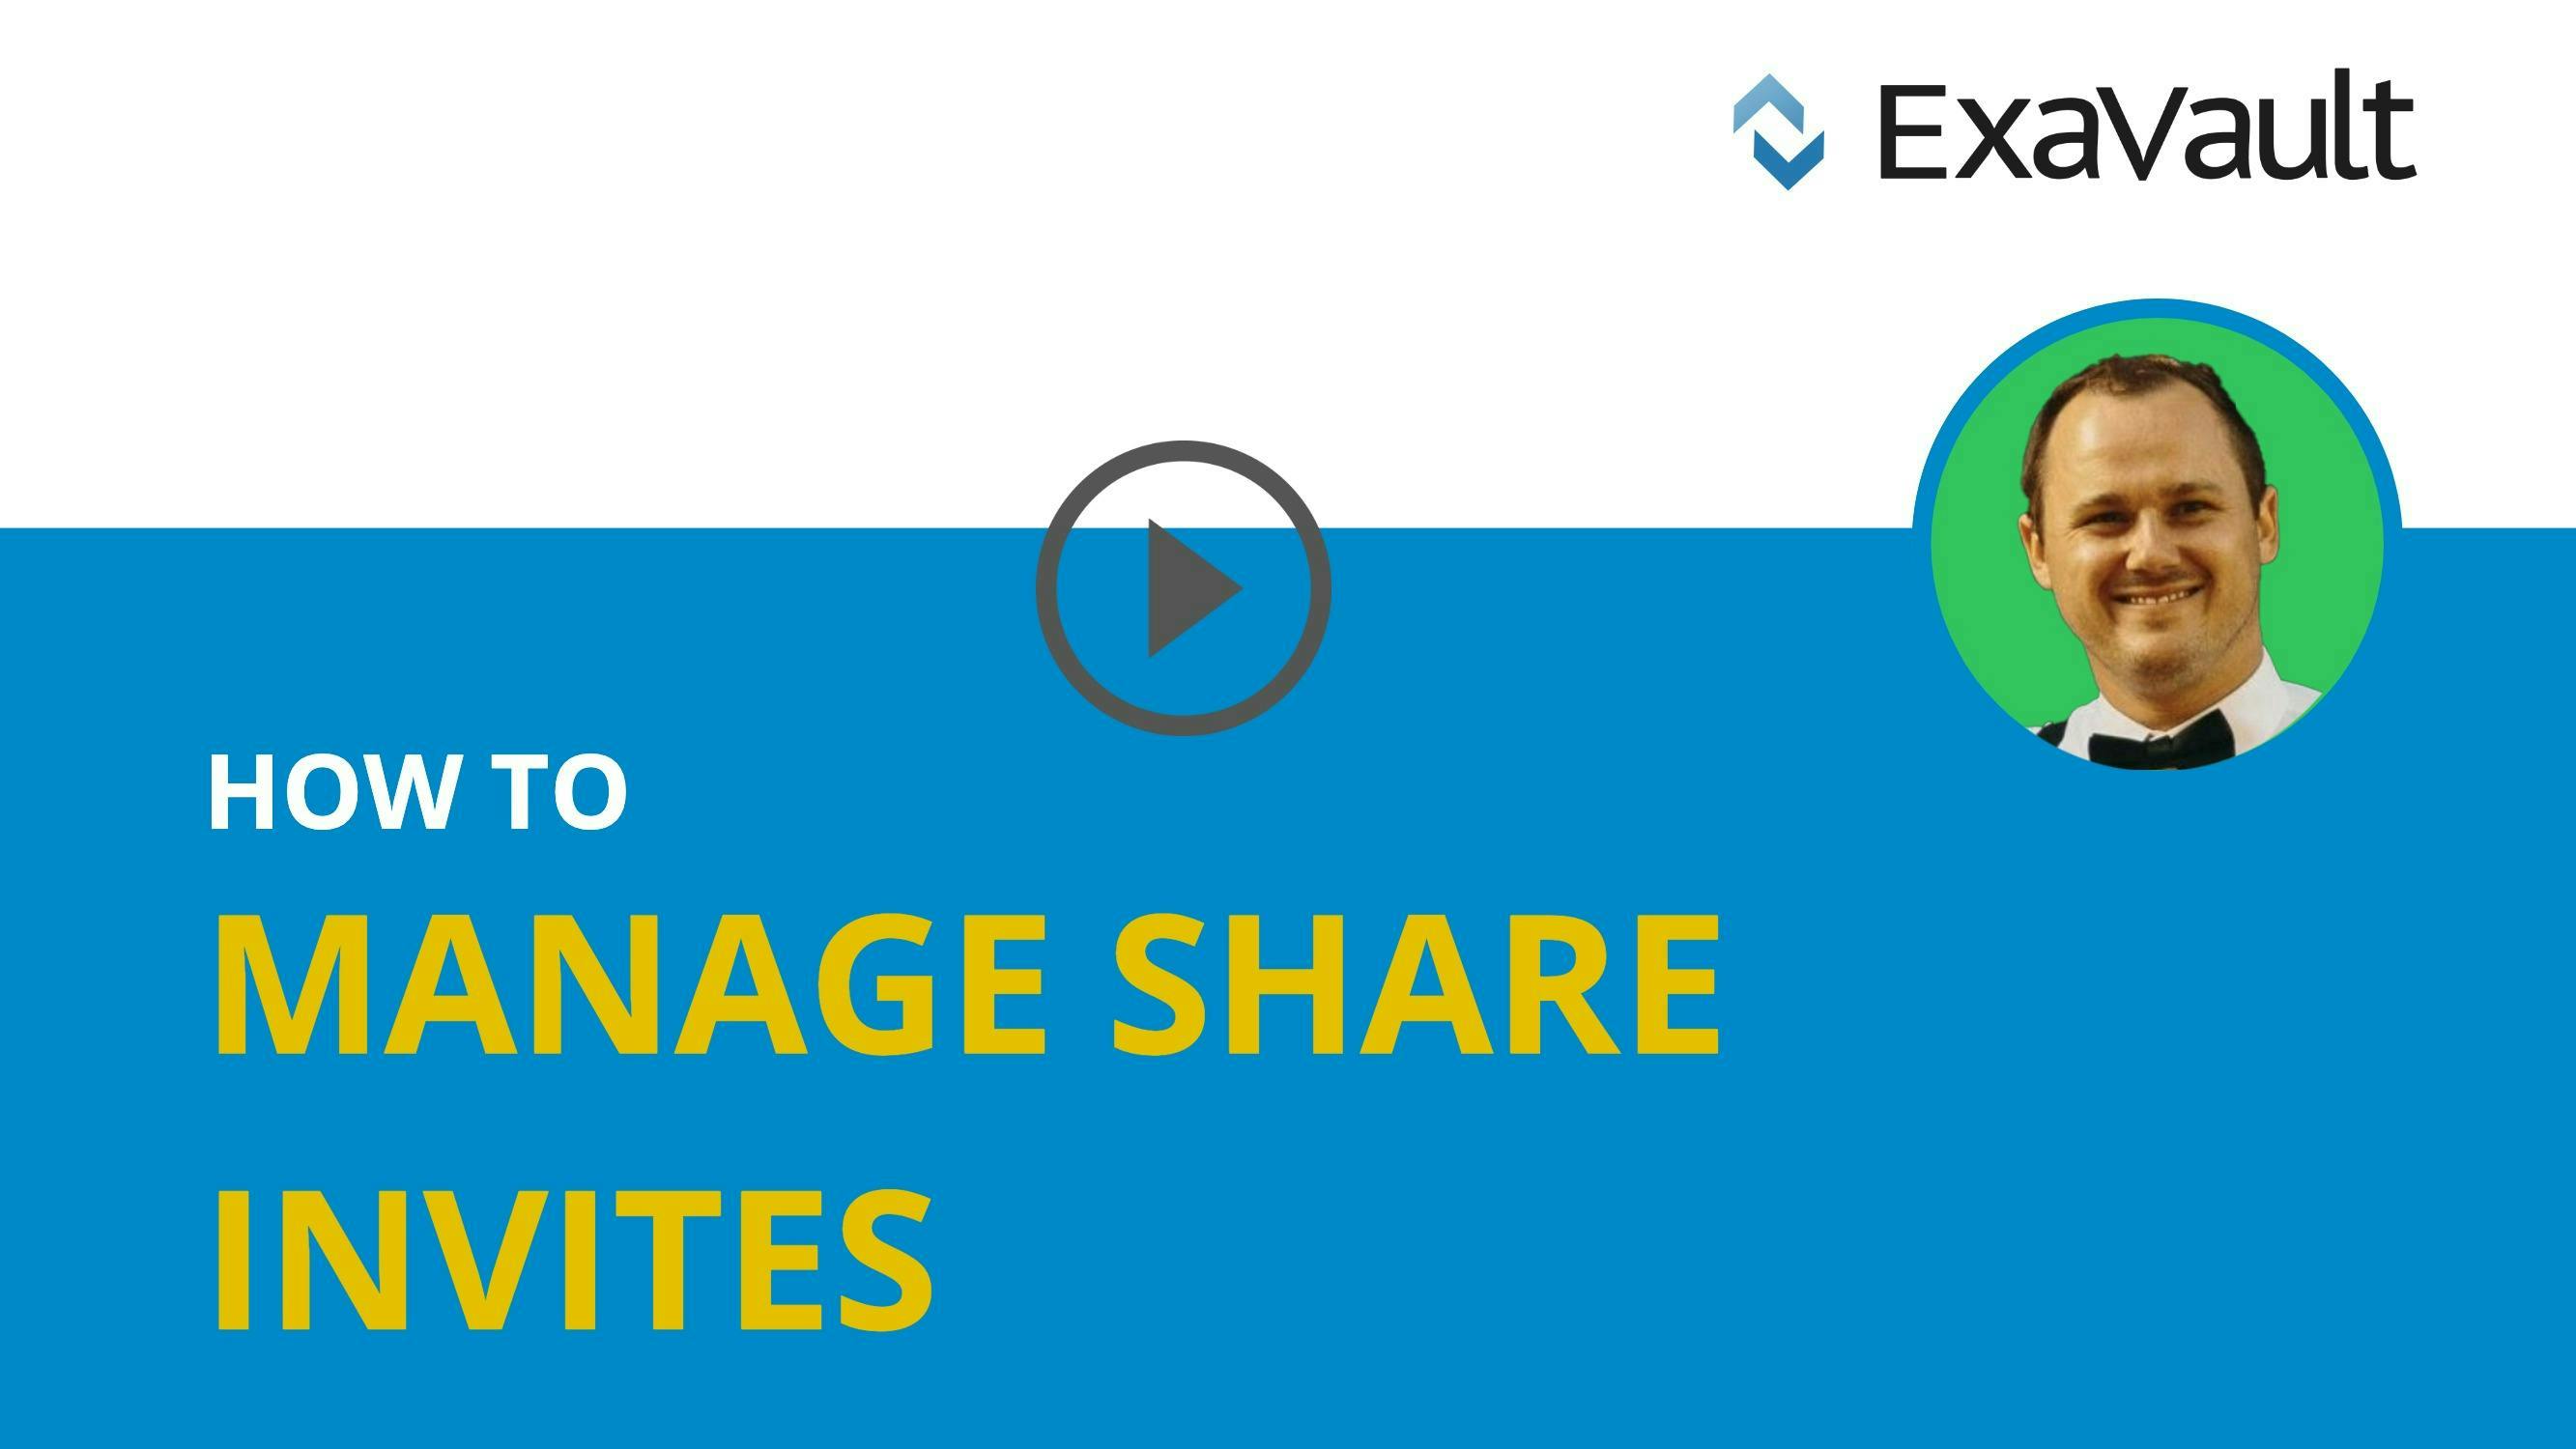 Manage share invites video thumbnail.